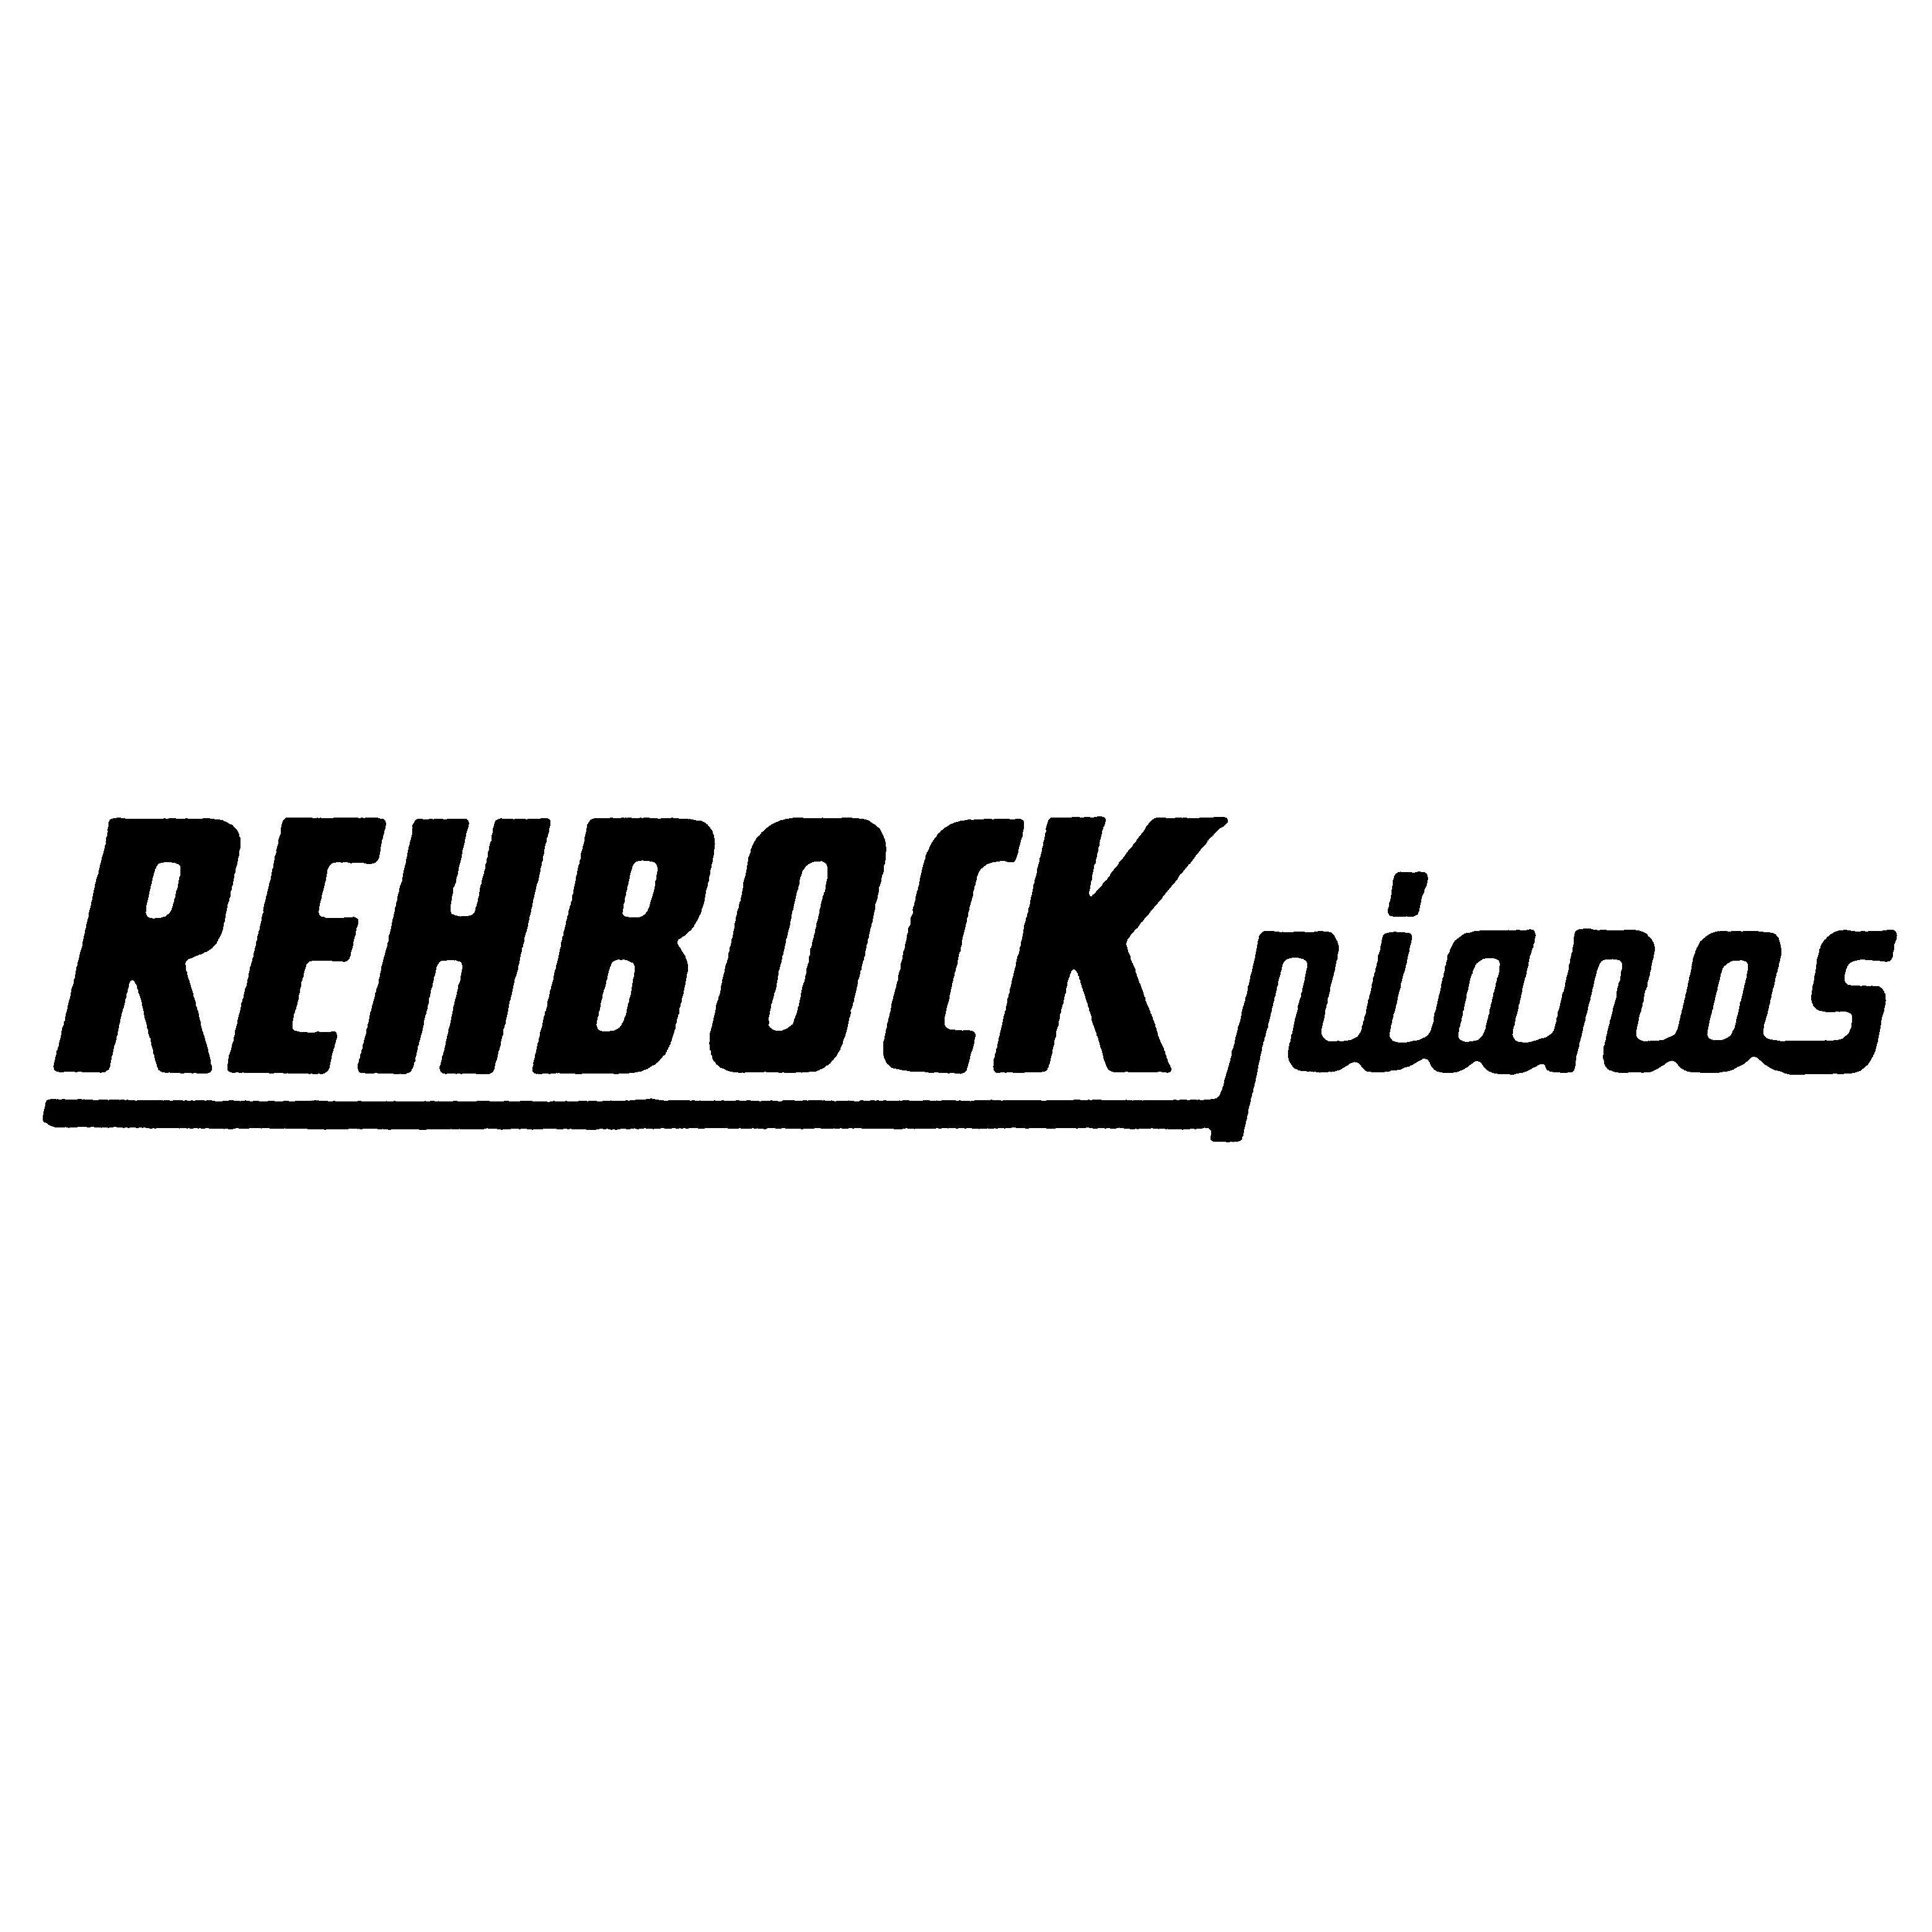 Rehbock Pianos in Düsseldorf - Logo